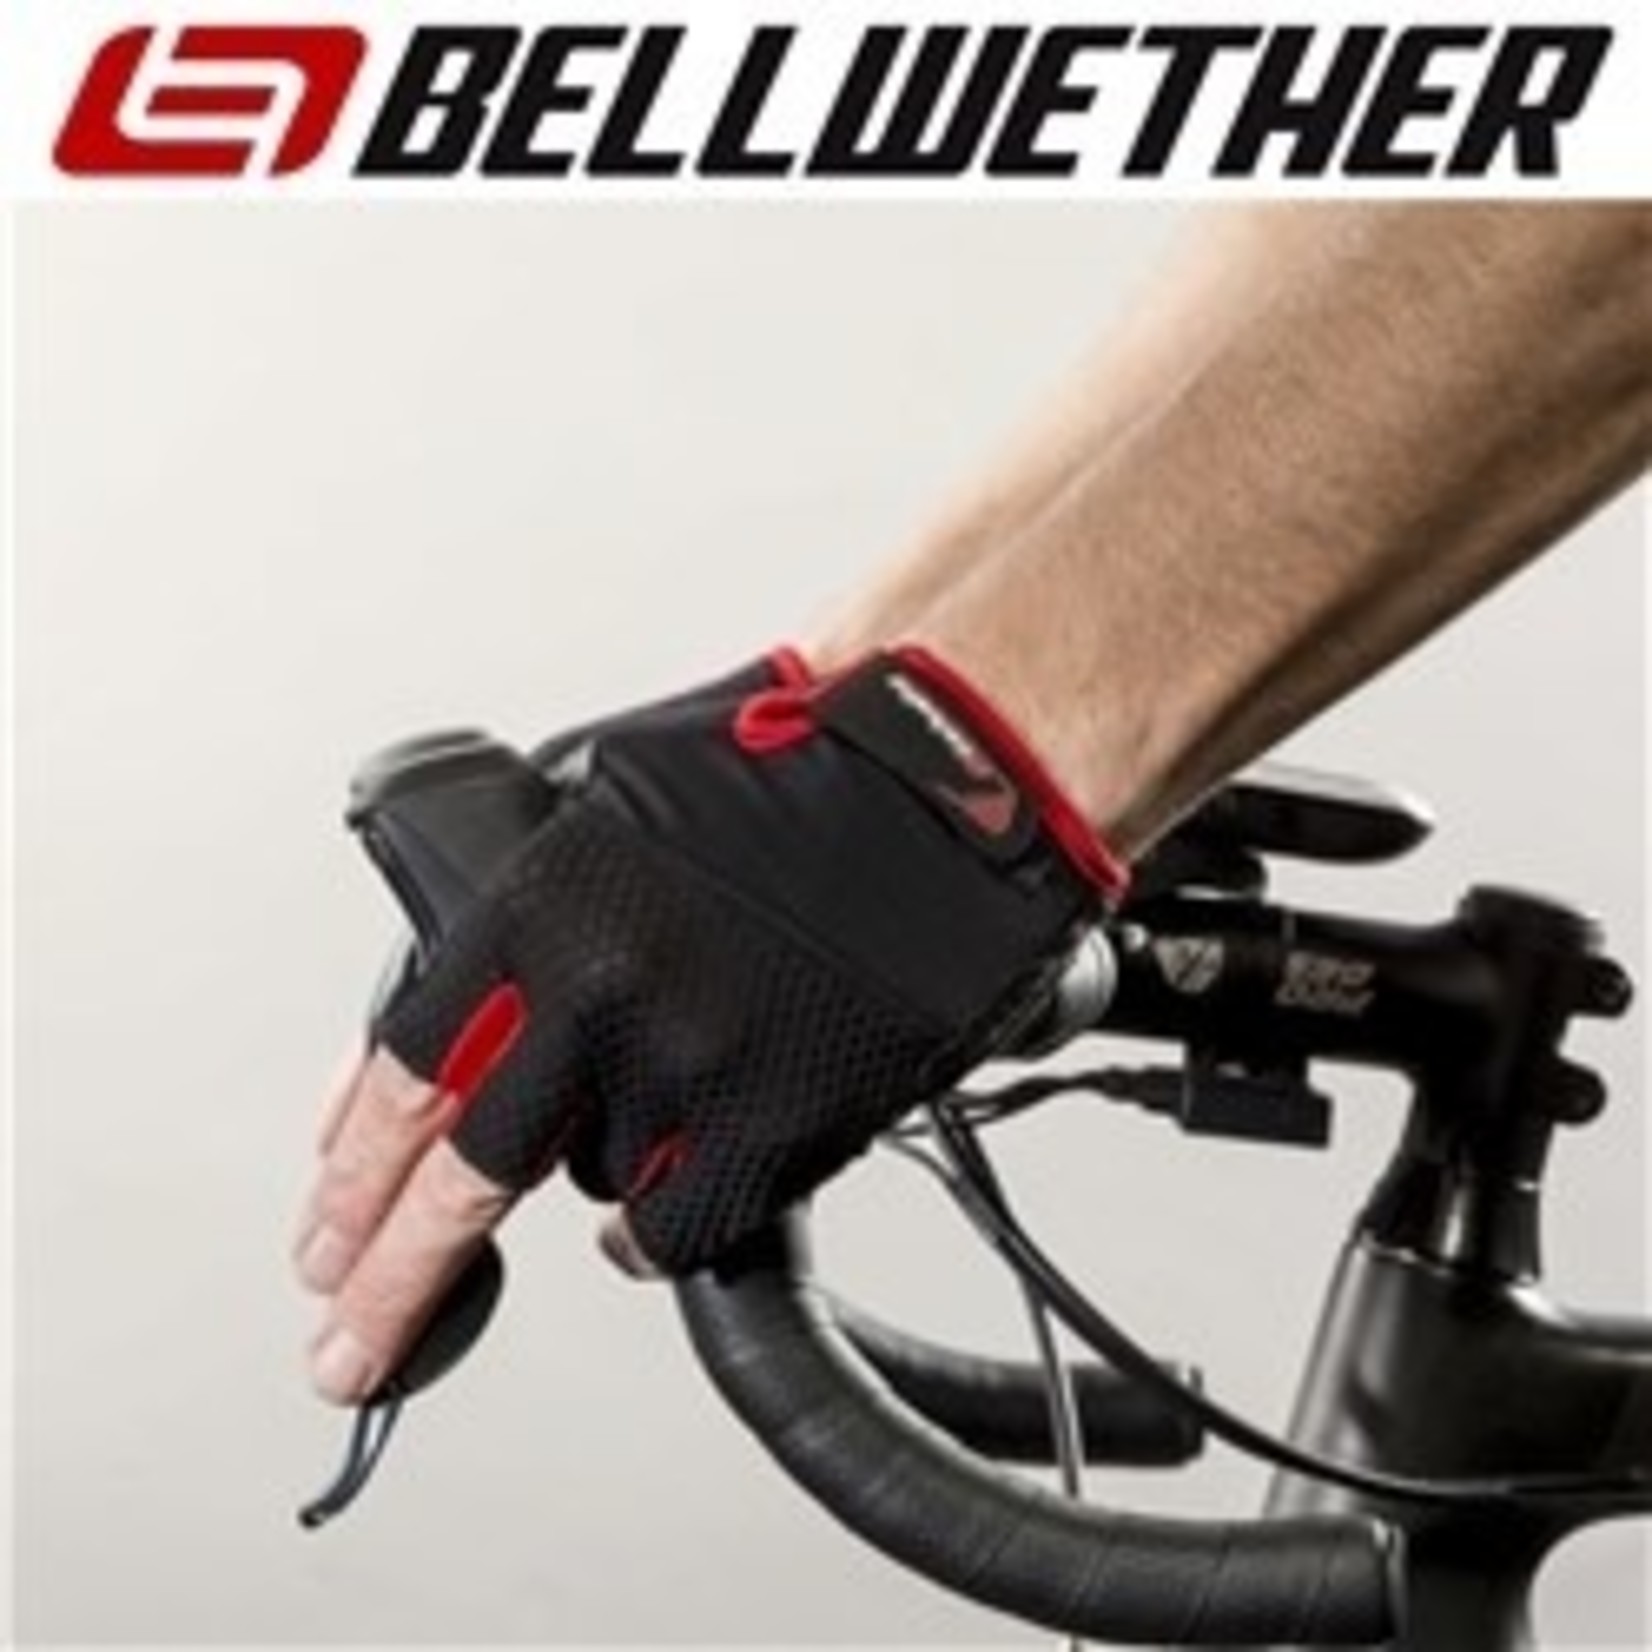 Bellwether Bellwether Cycling/Bike Gloves - Men's Gel Supreme - Ferrari